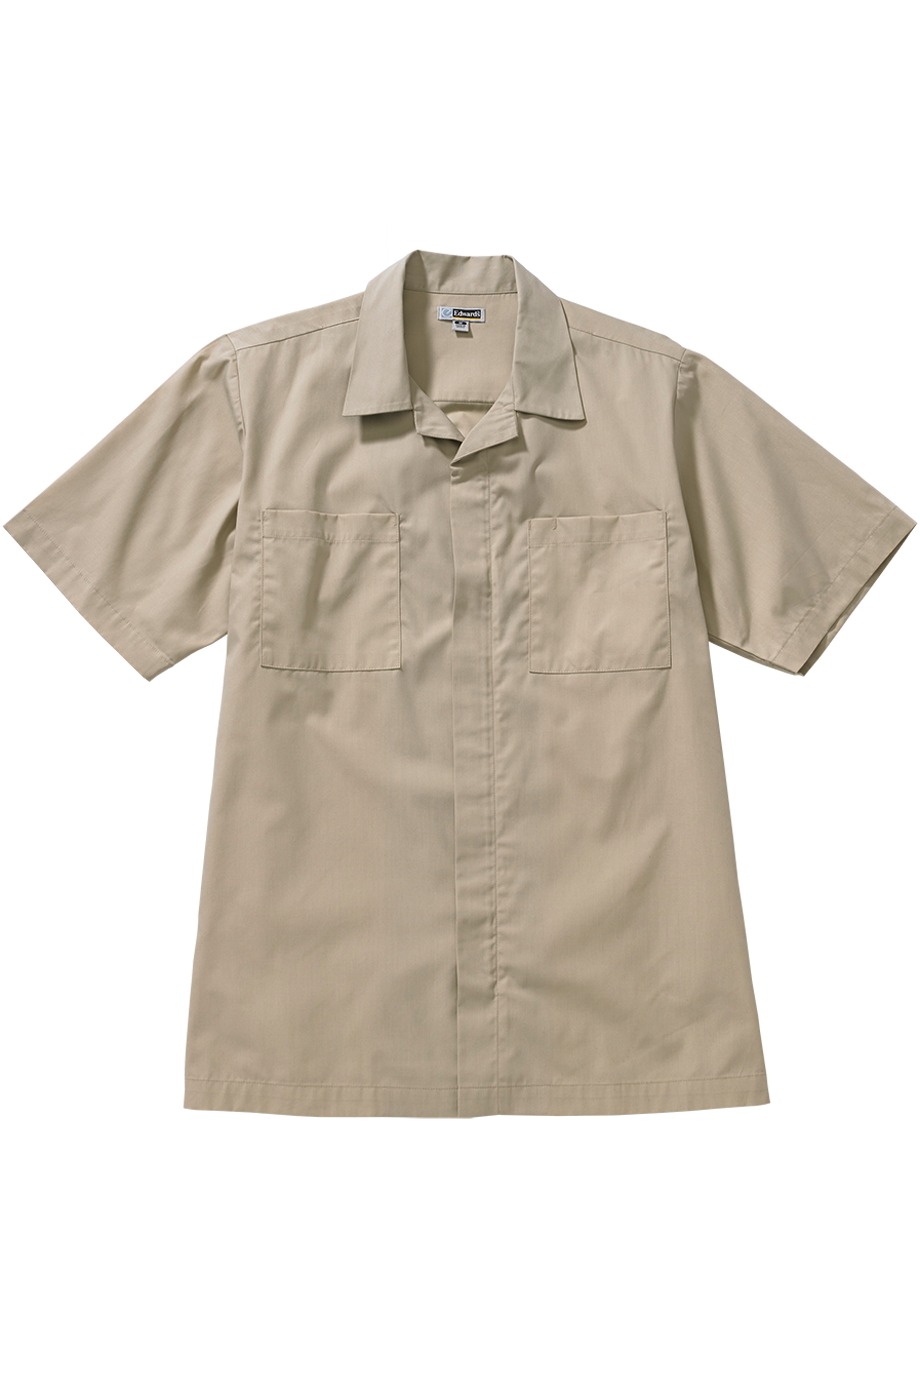 Edwards Garment 4889 - Housekeeping Service Shirt